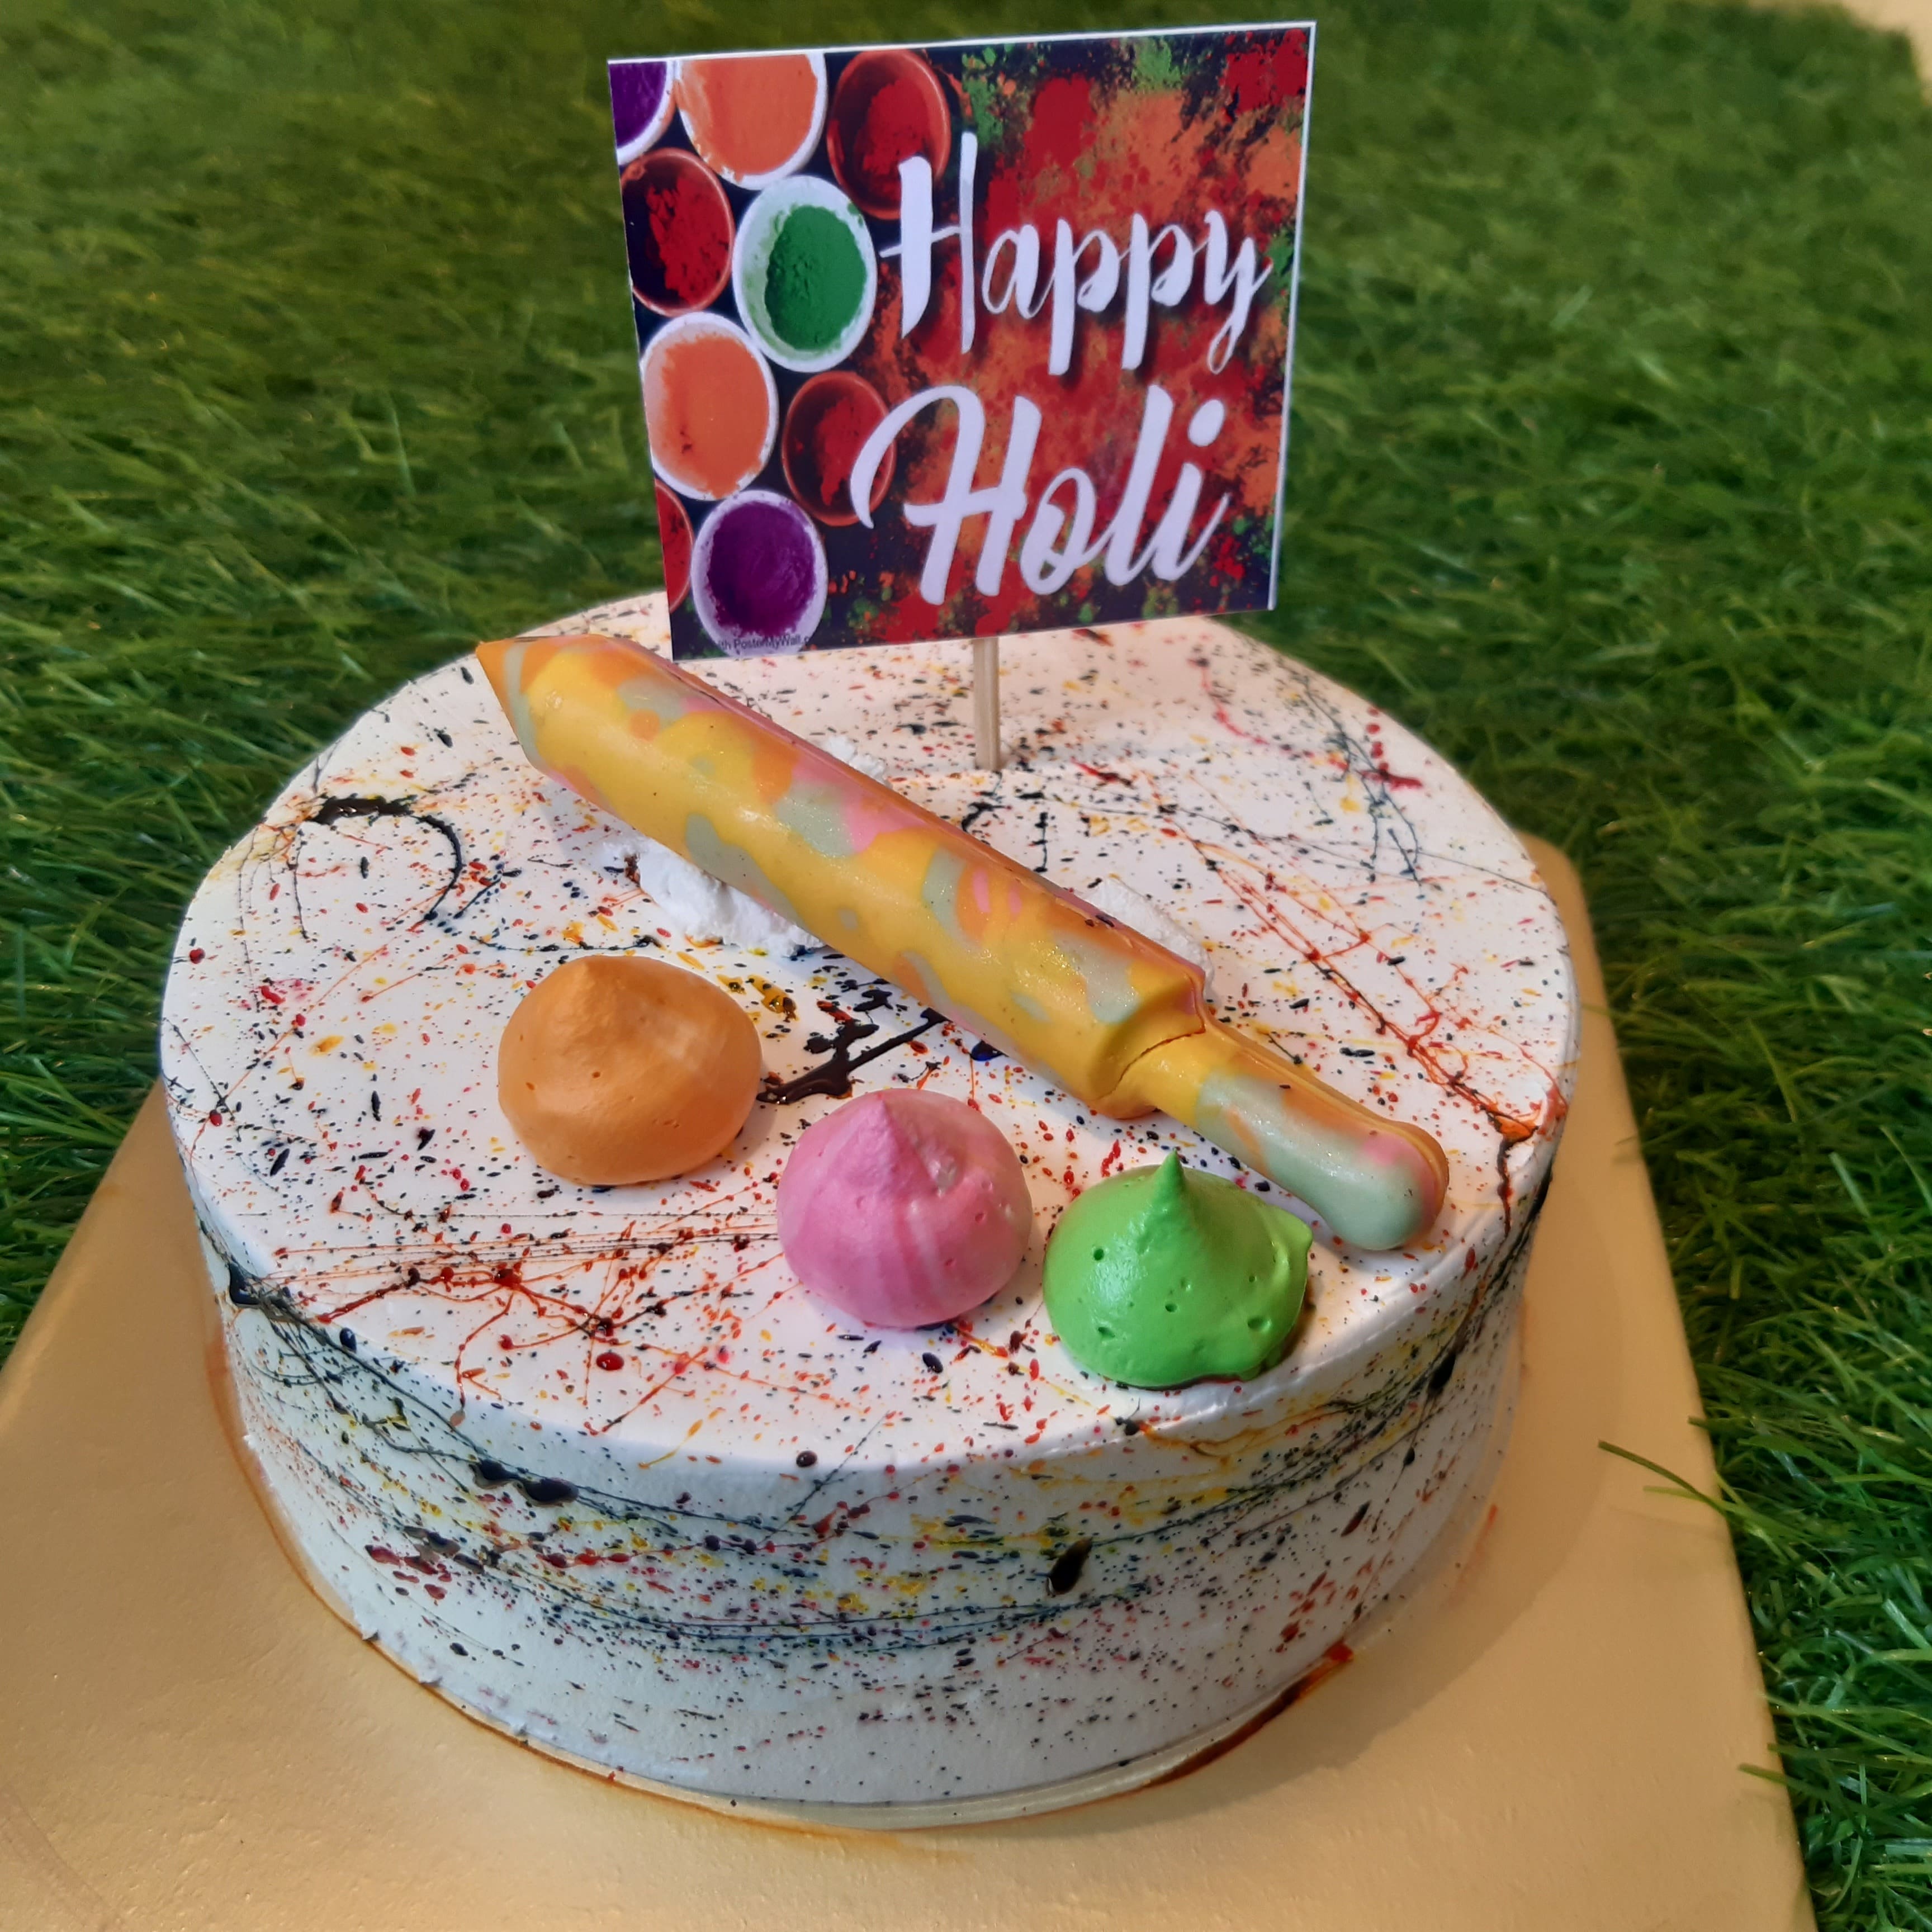 Buy/Send Happy Holi Colorful Vanilla Cake Online @ Rs. 3989 - SendBestGift